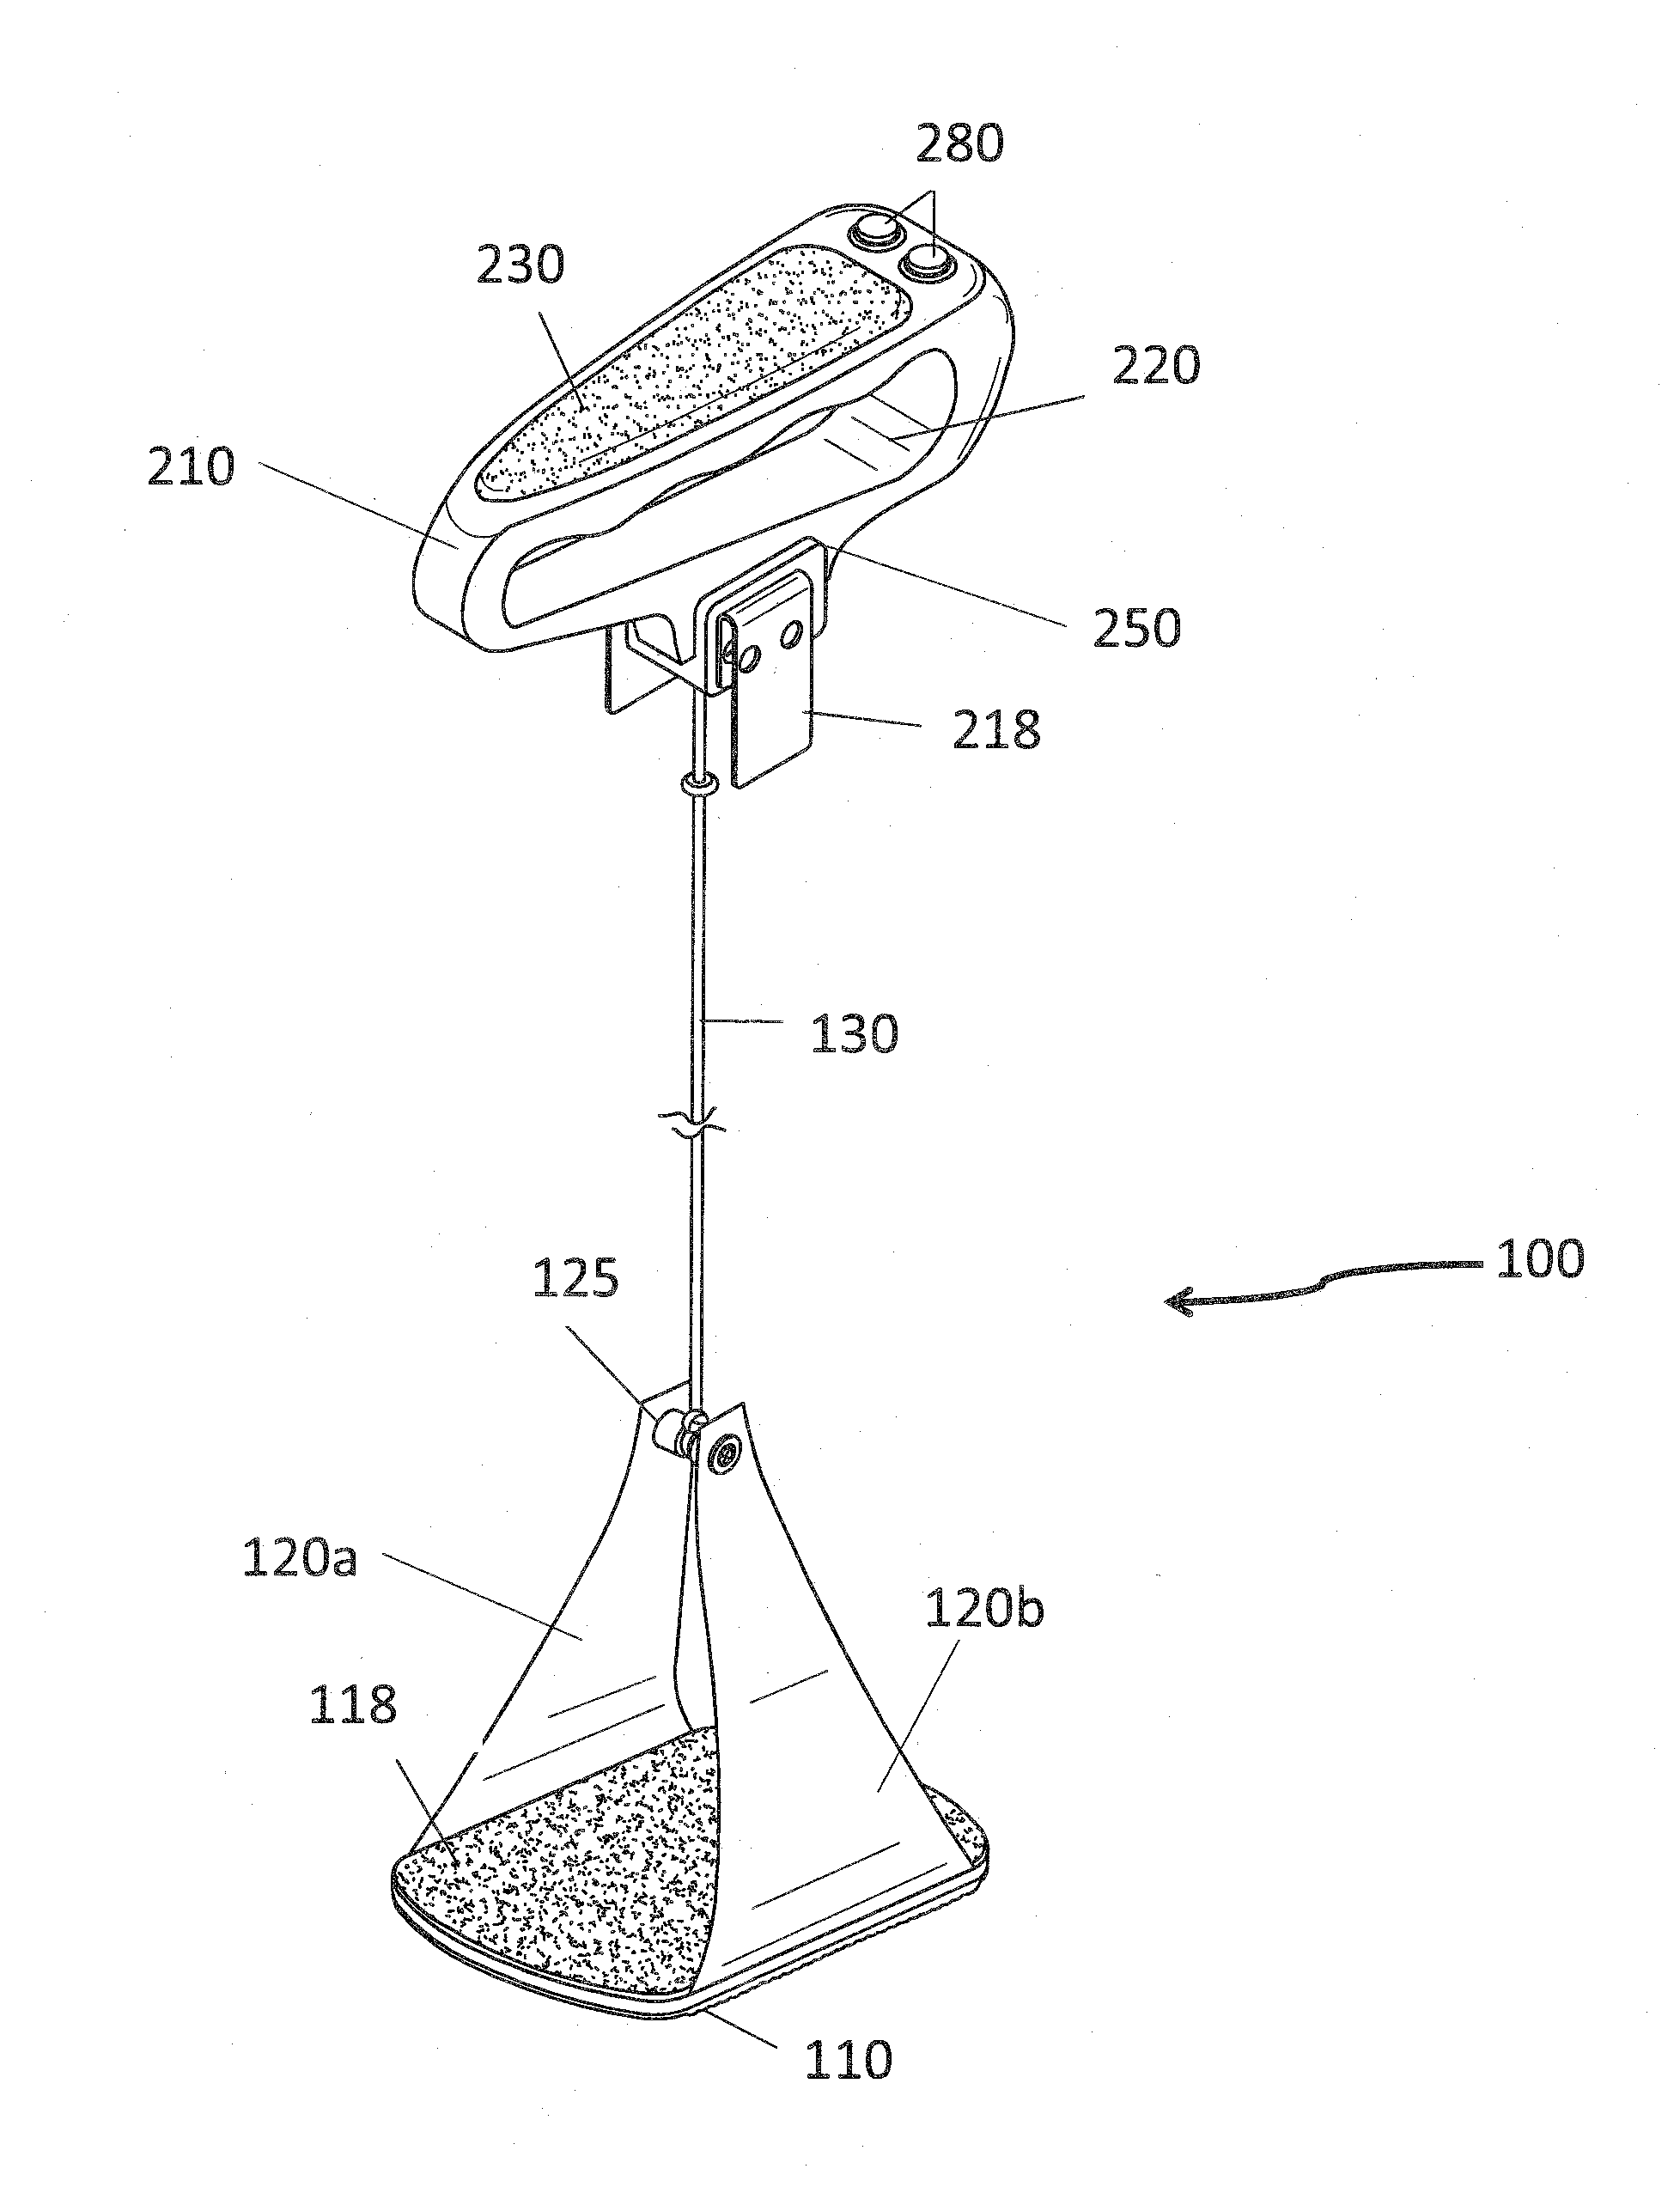 Leg sling device